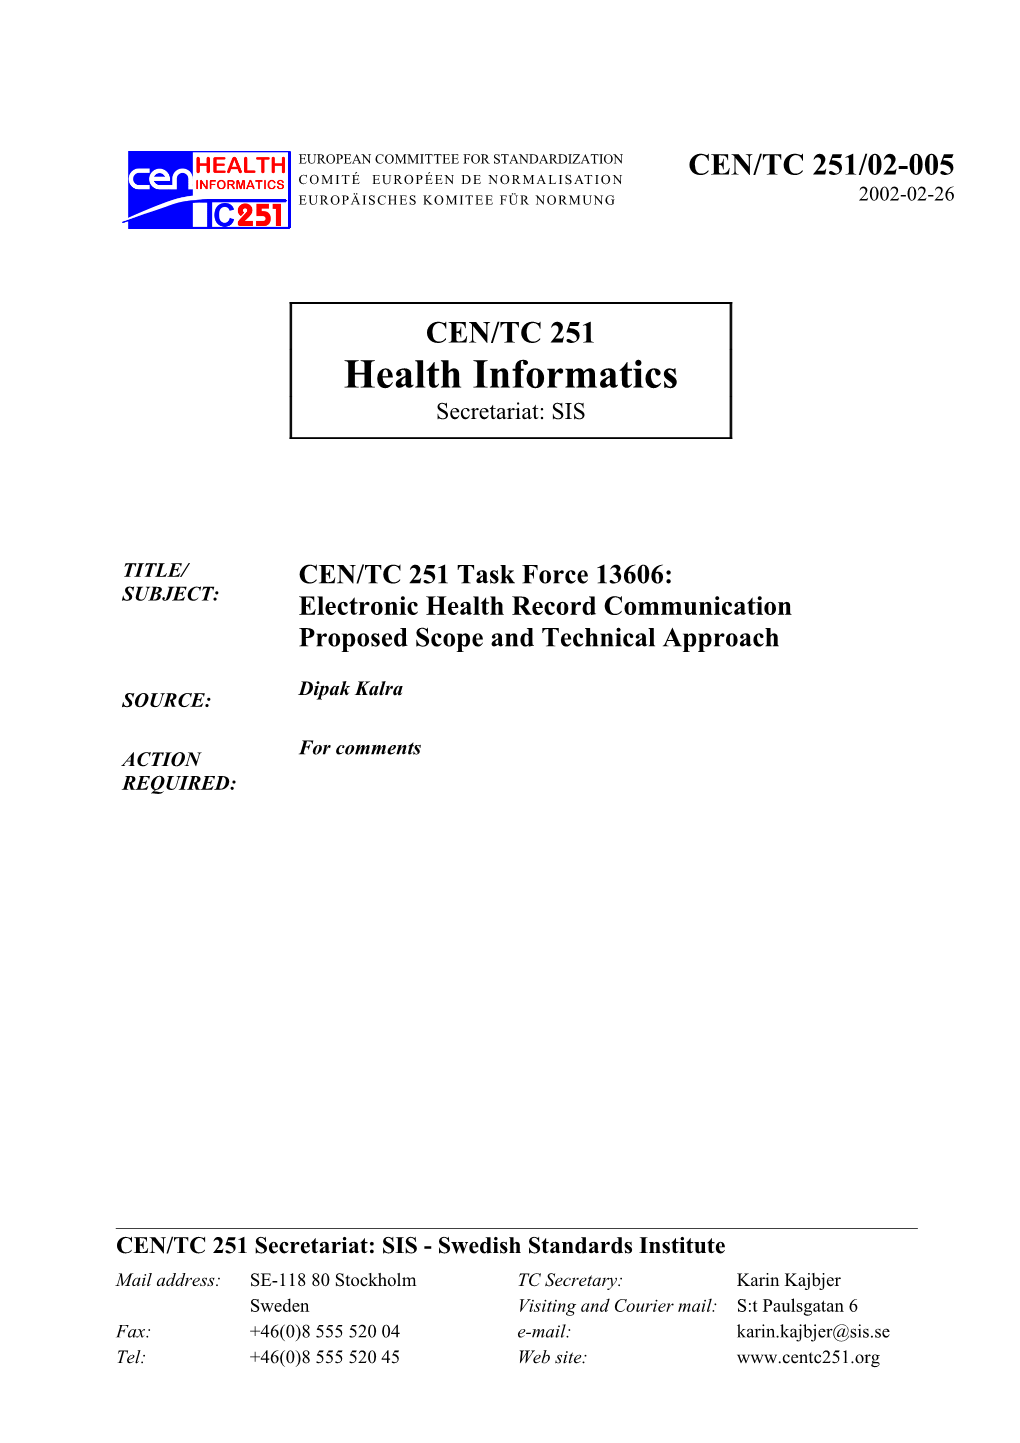 CEN TC/251/02-005Ehrcom Scope and Technical Approach V1.0